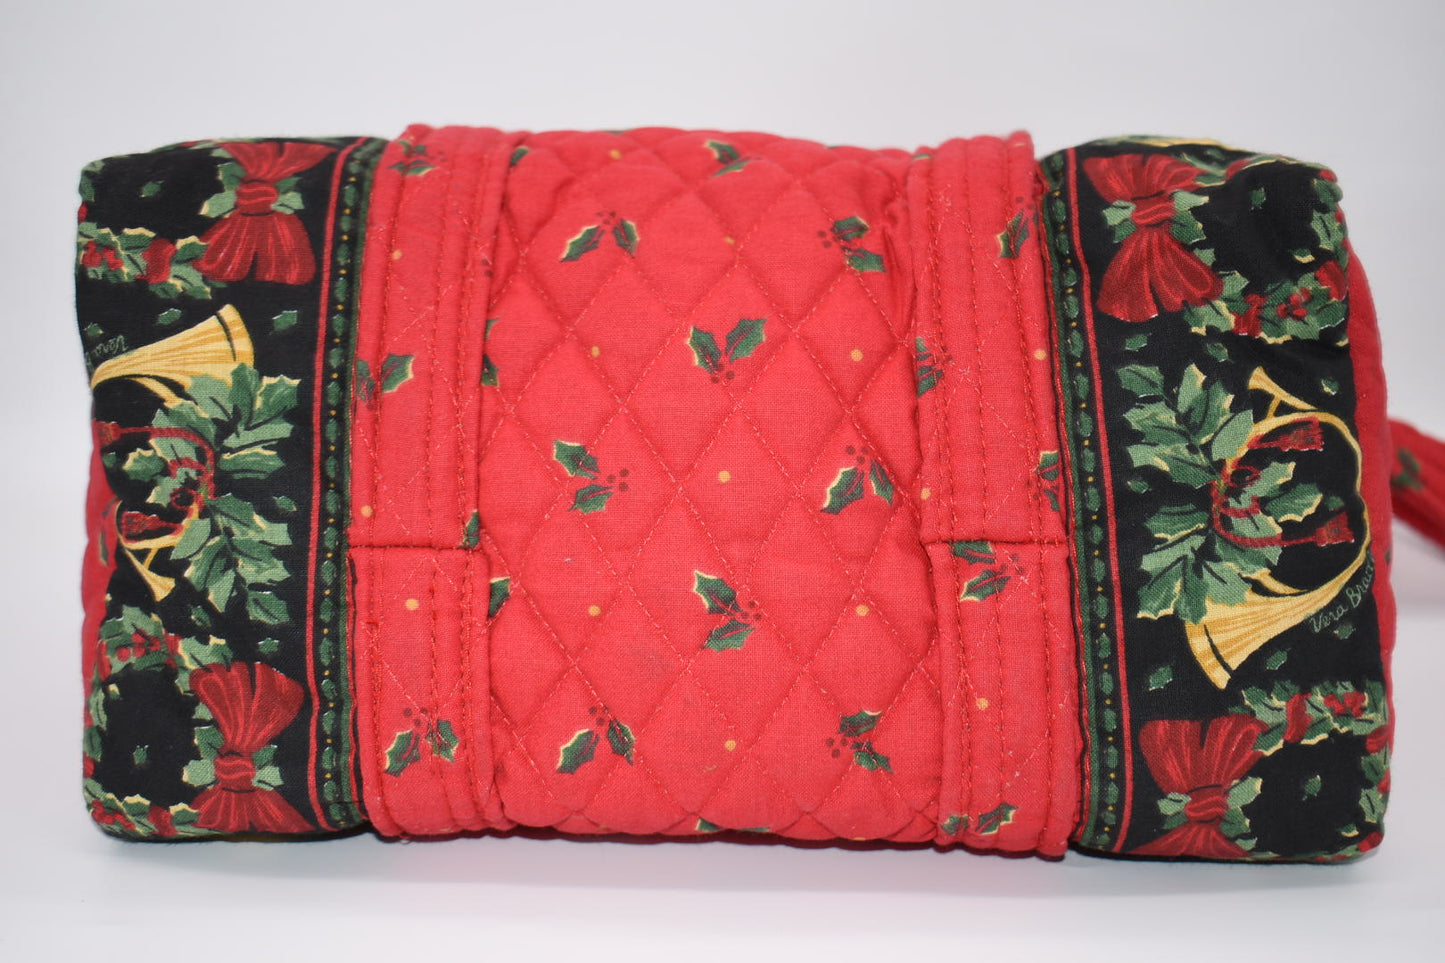 Vera Bradley Rare & Vintage "Red Holiday" Handbag